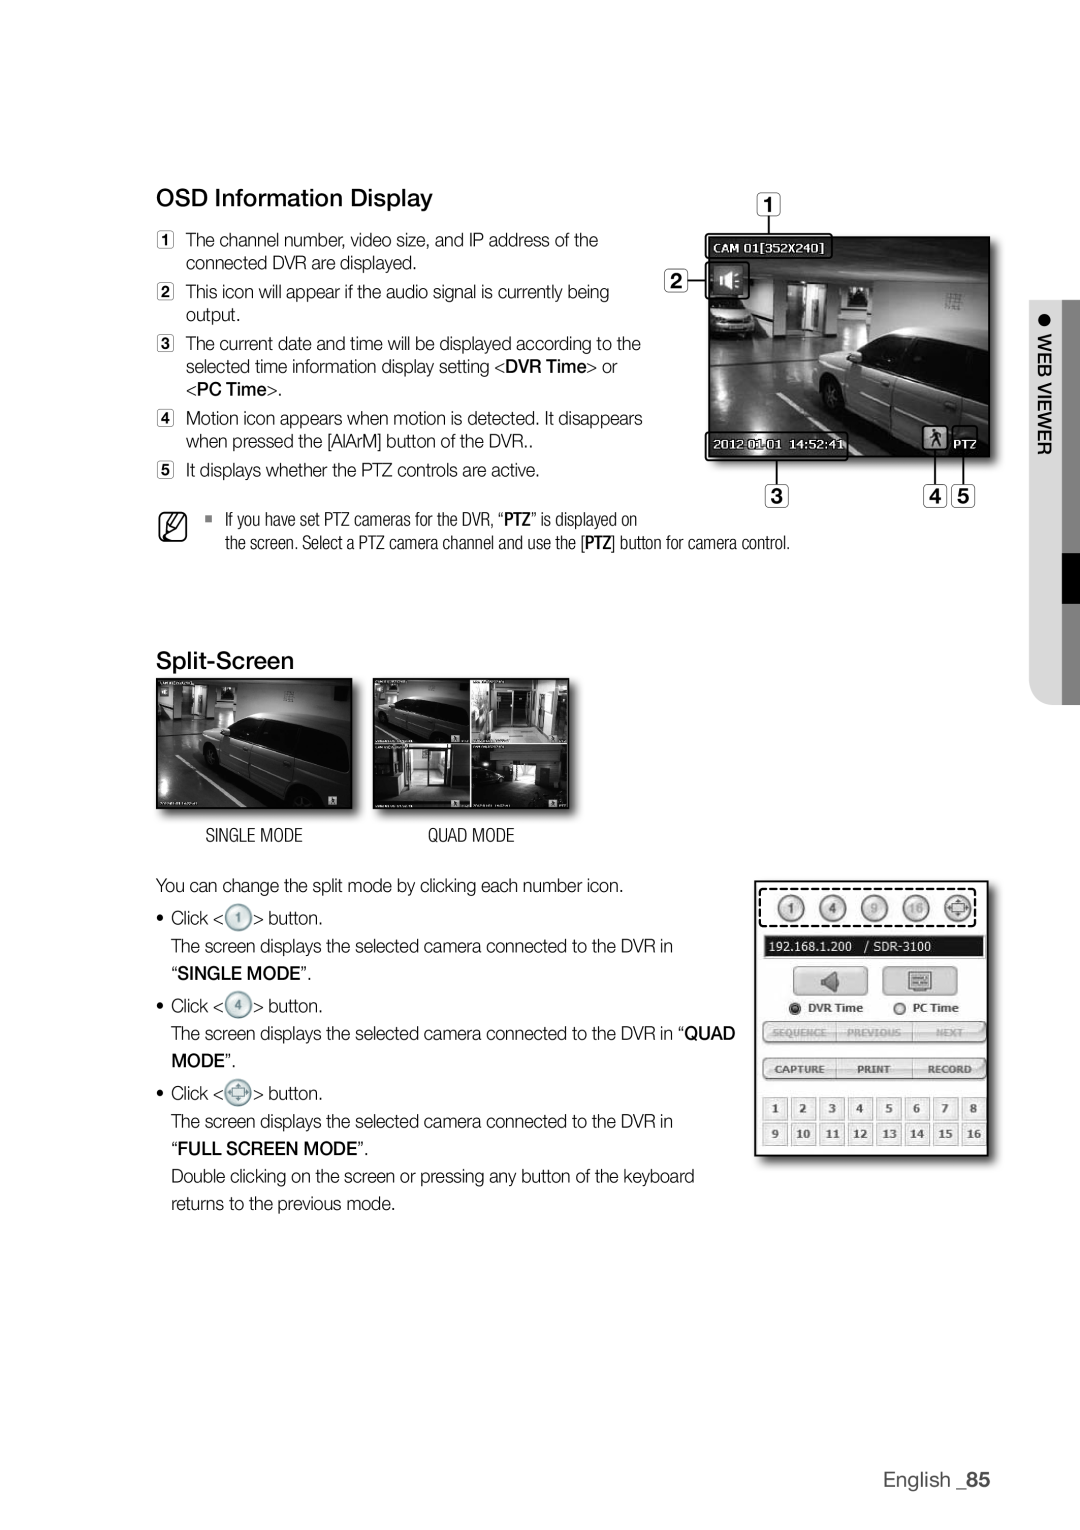 Samsung SDR3100 user manual oSd Information display, Split-Screen, English _85 